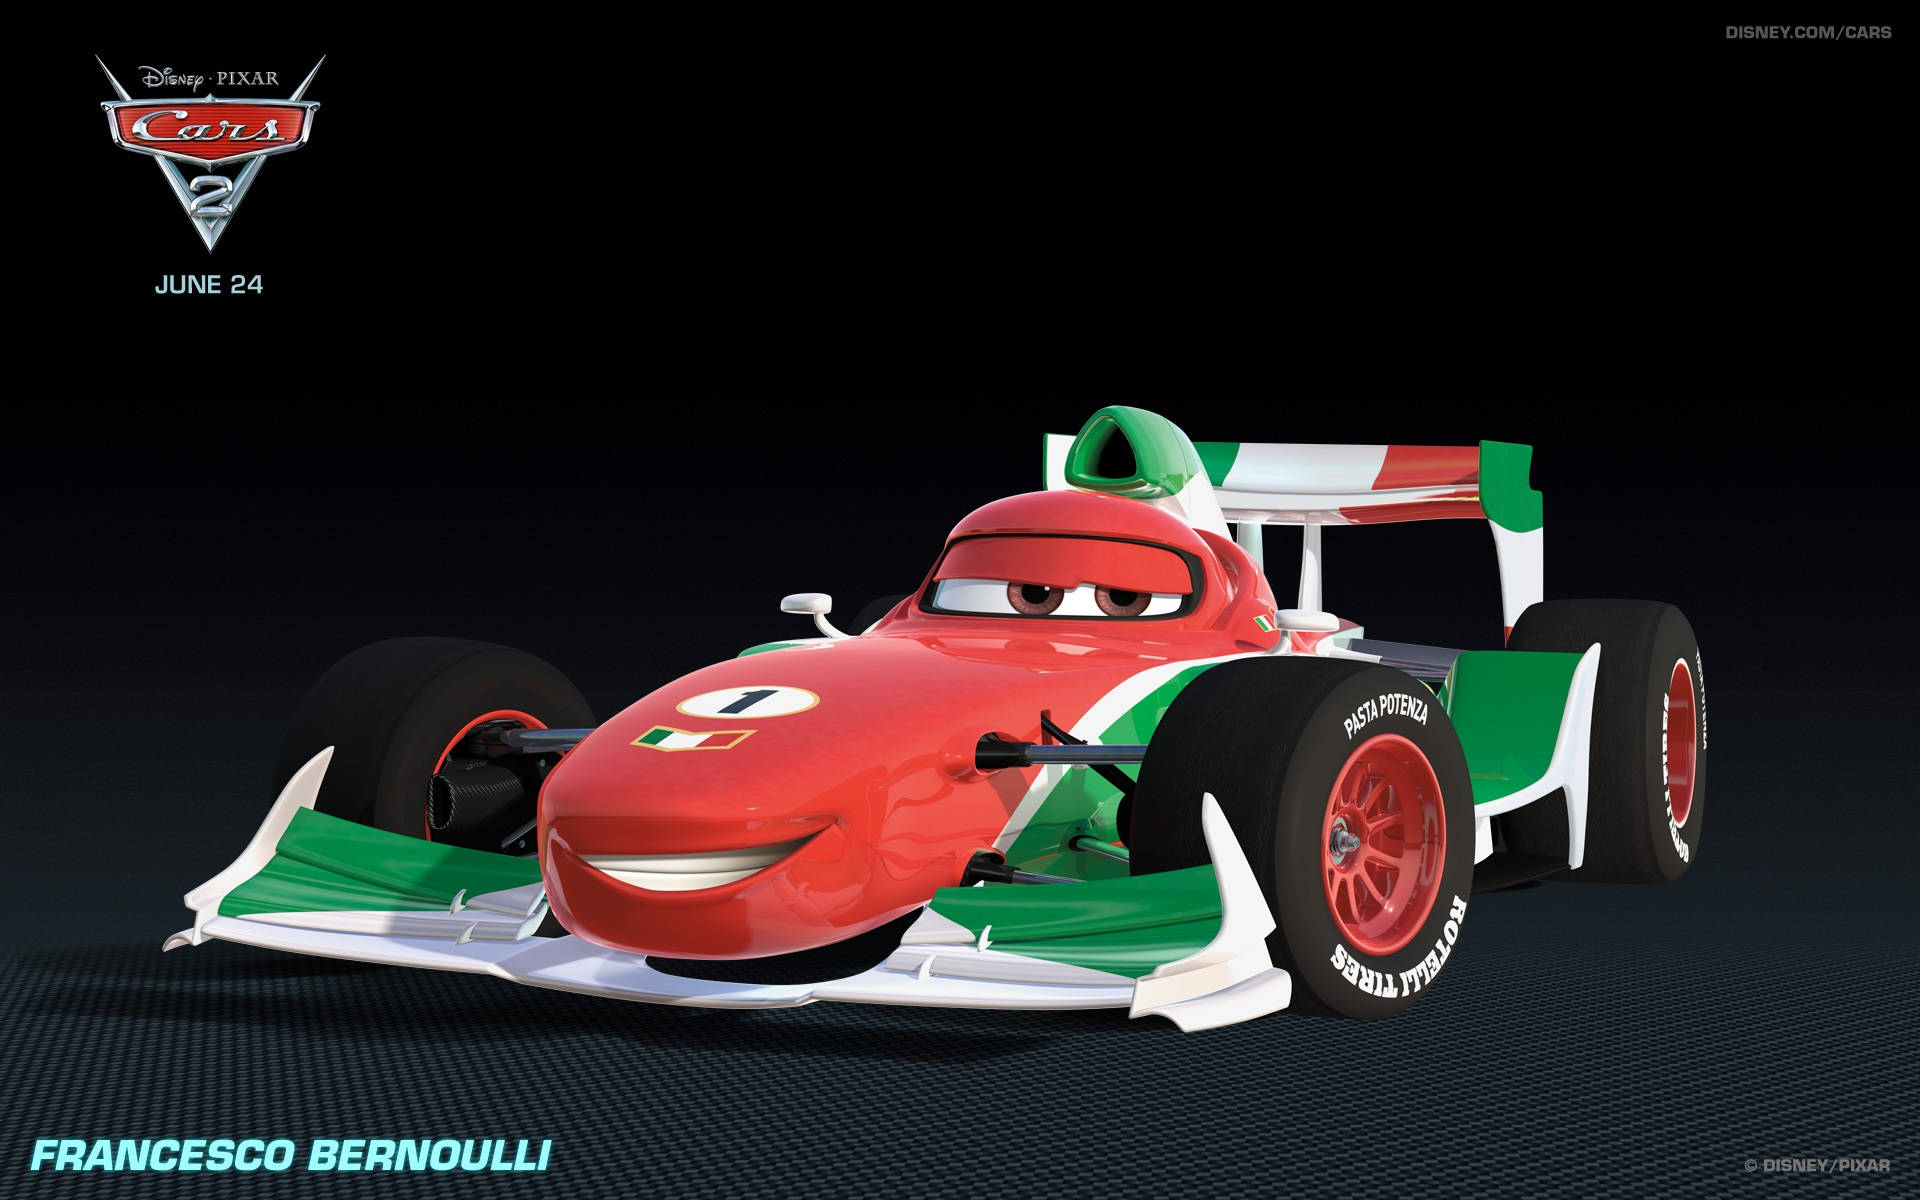 Francesco Bernoulli, The Speedy Race Car From Disney Pixar's Cars 2 Background